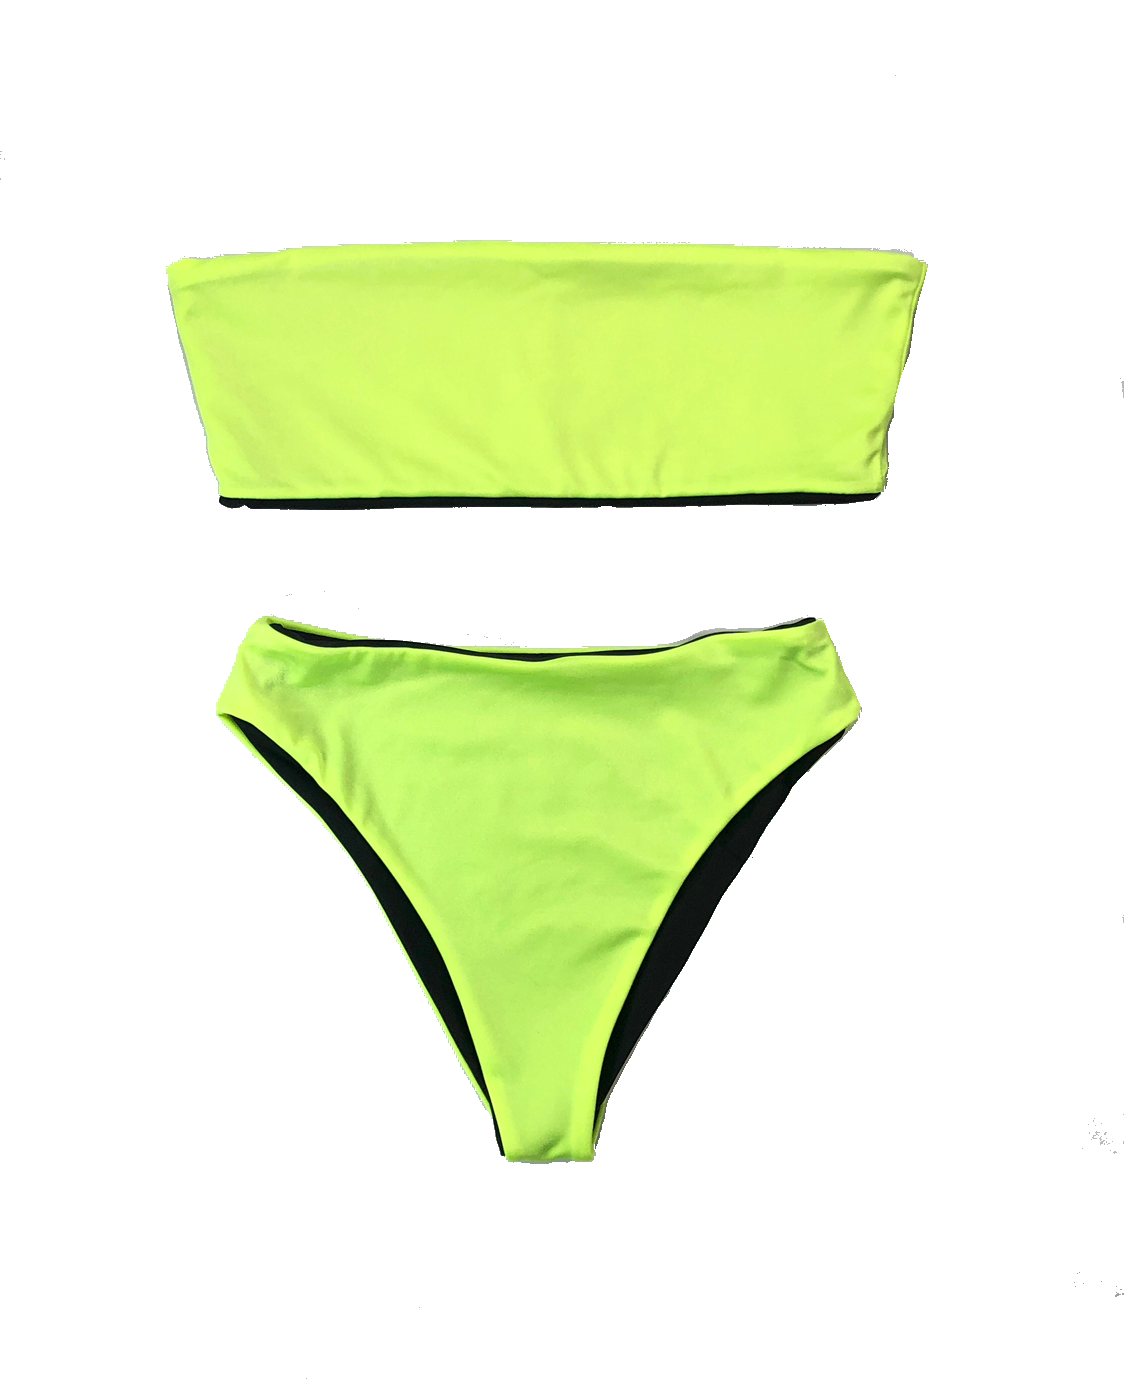 wendolin-designs - Wendolin Designs -  - Reversible High Waist Bikini Bottoms- Neon Green And Black Swimsuit High Leg Cut